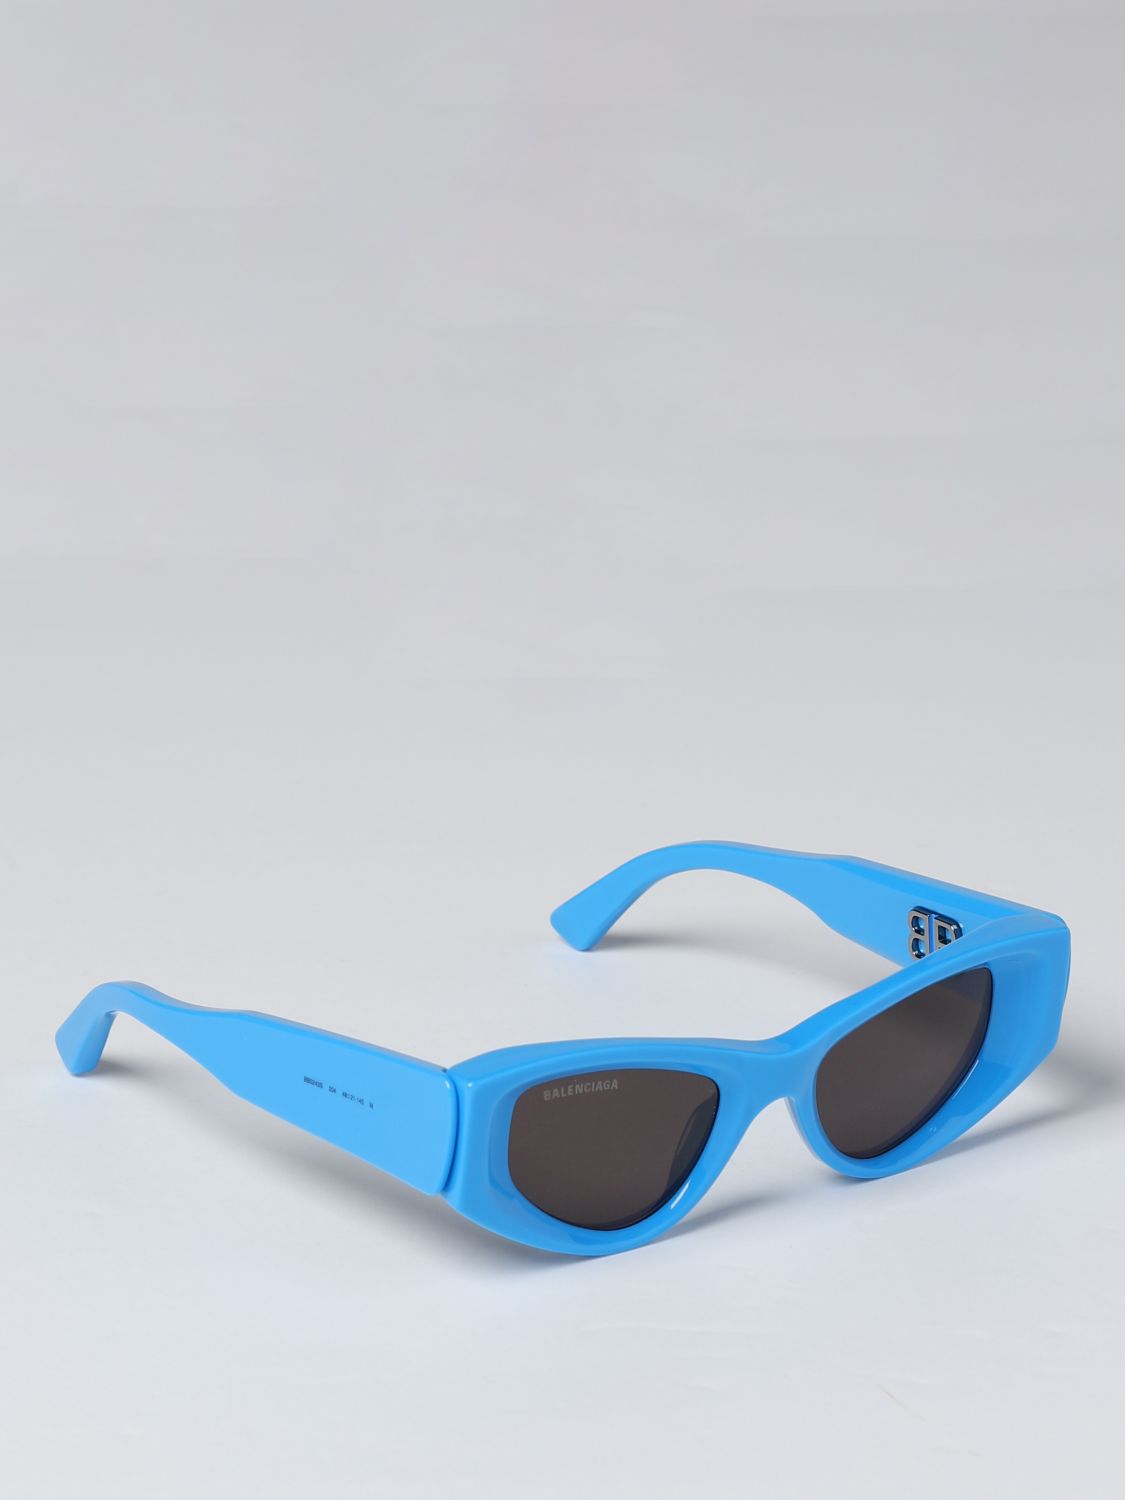 Sobriquette Lav et navn Pinpoint Balenciaga Outlet: sunglasses for woman - Blue | Balenciaga sunglasses  BB0243S online on GIGLIO.COM